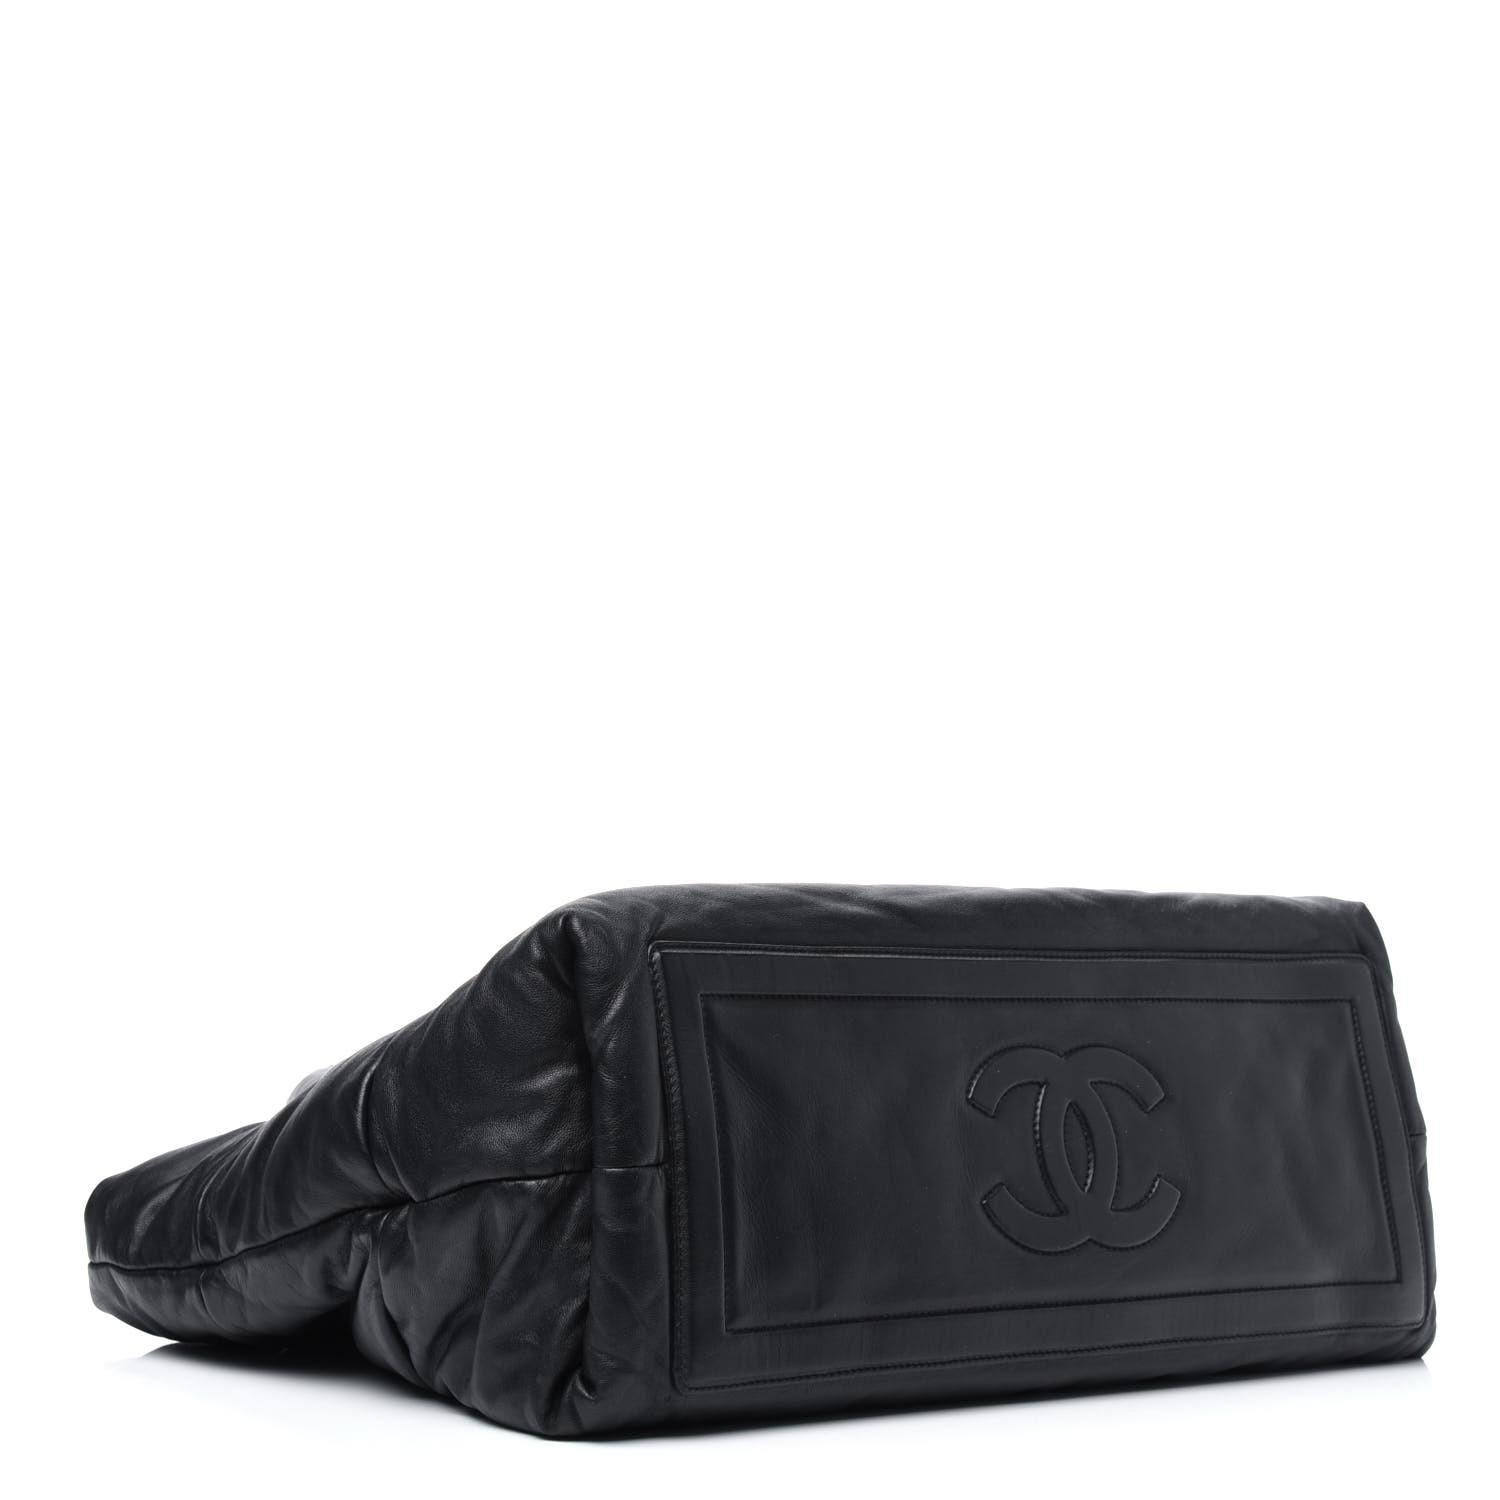 Chanel 2008 Cocoon Réversible Large Black Red Lambskin Travel Tote Carry On Bag  en vente 5